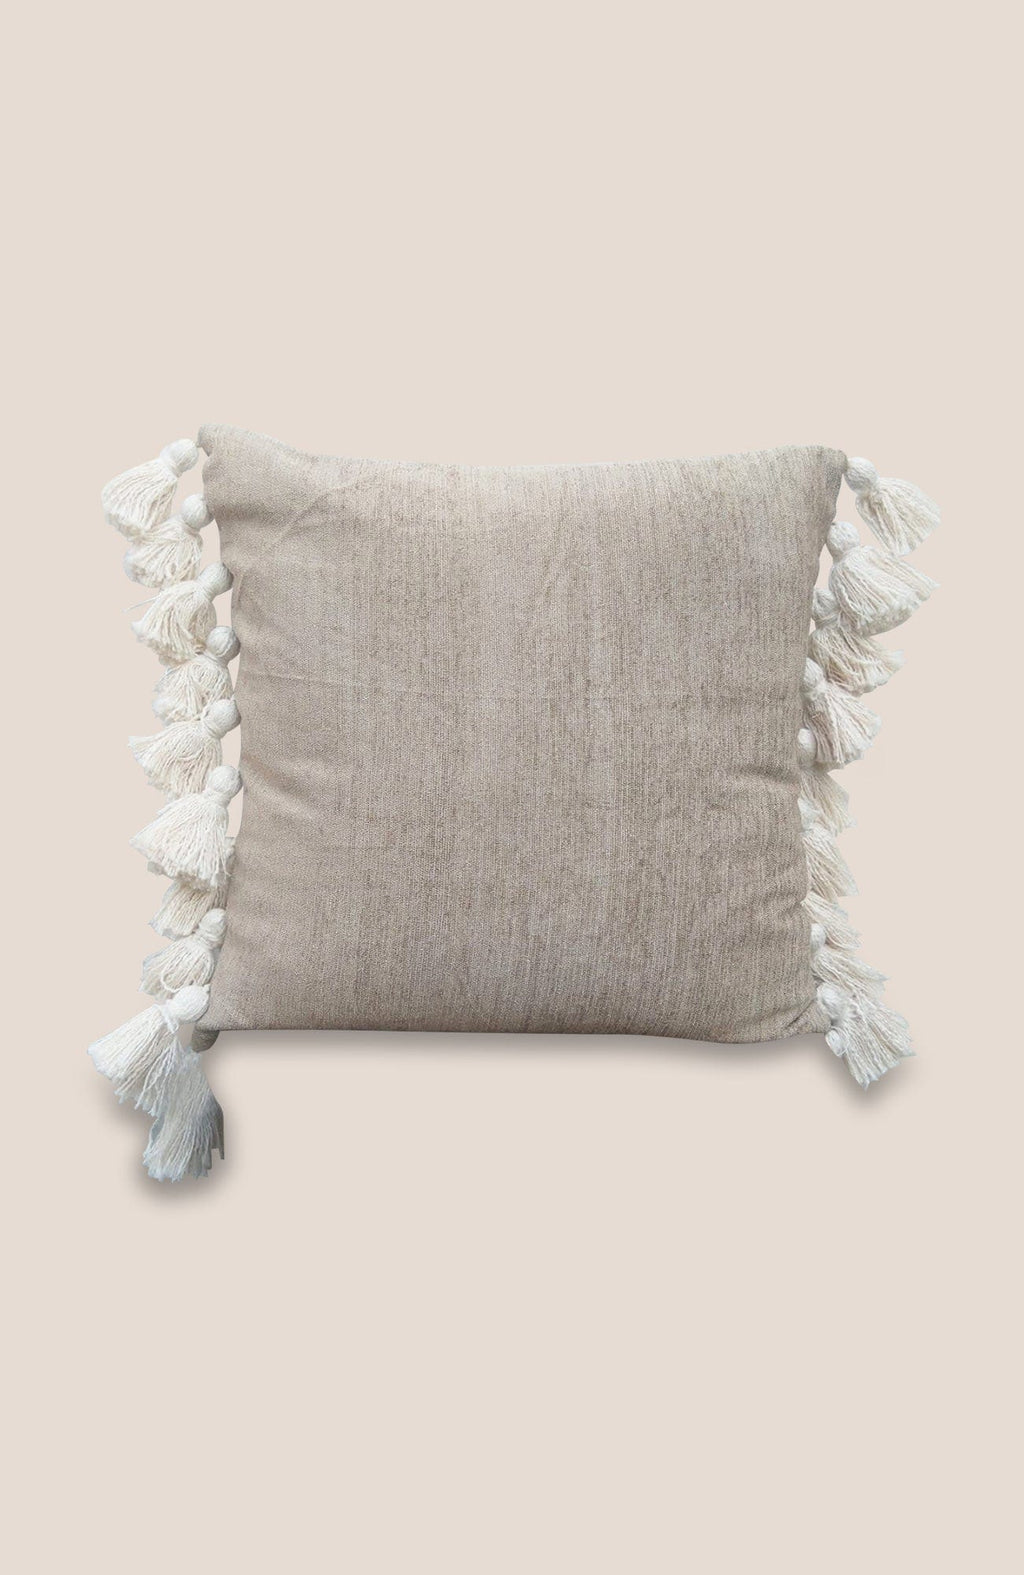 Pompon Pillow Cover Adora - Home Decor | Shop Baskets, Ceramics, Pillows, Rugs & Wall Hangs online